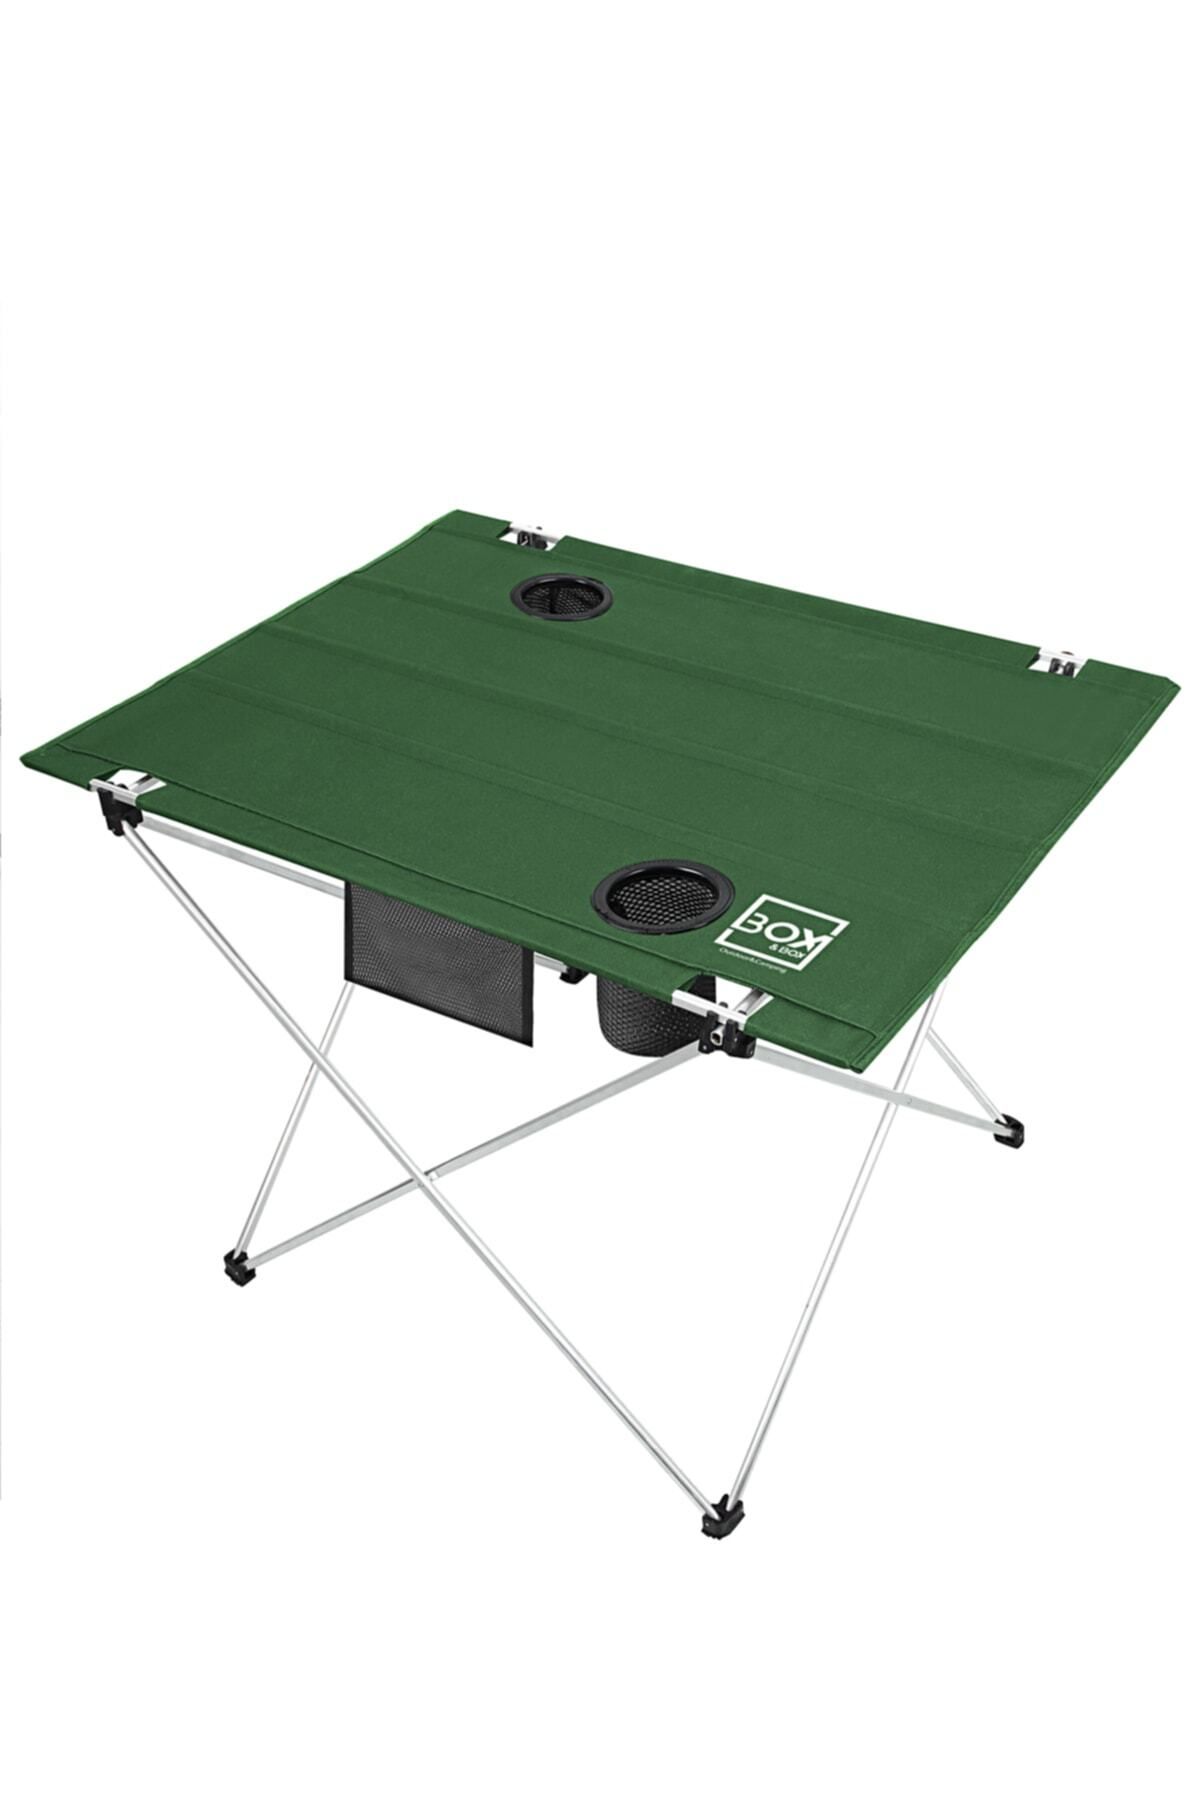 Box&Box Katlanabilir Kumaş Kamp Ve Piknik Masası, Yeşil, Geniş Model, 2 Bardak Gözü, 73x55x48cm